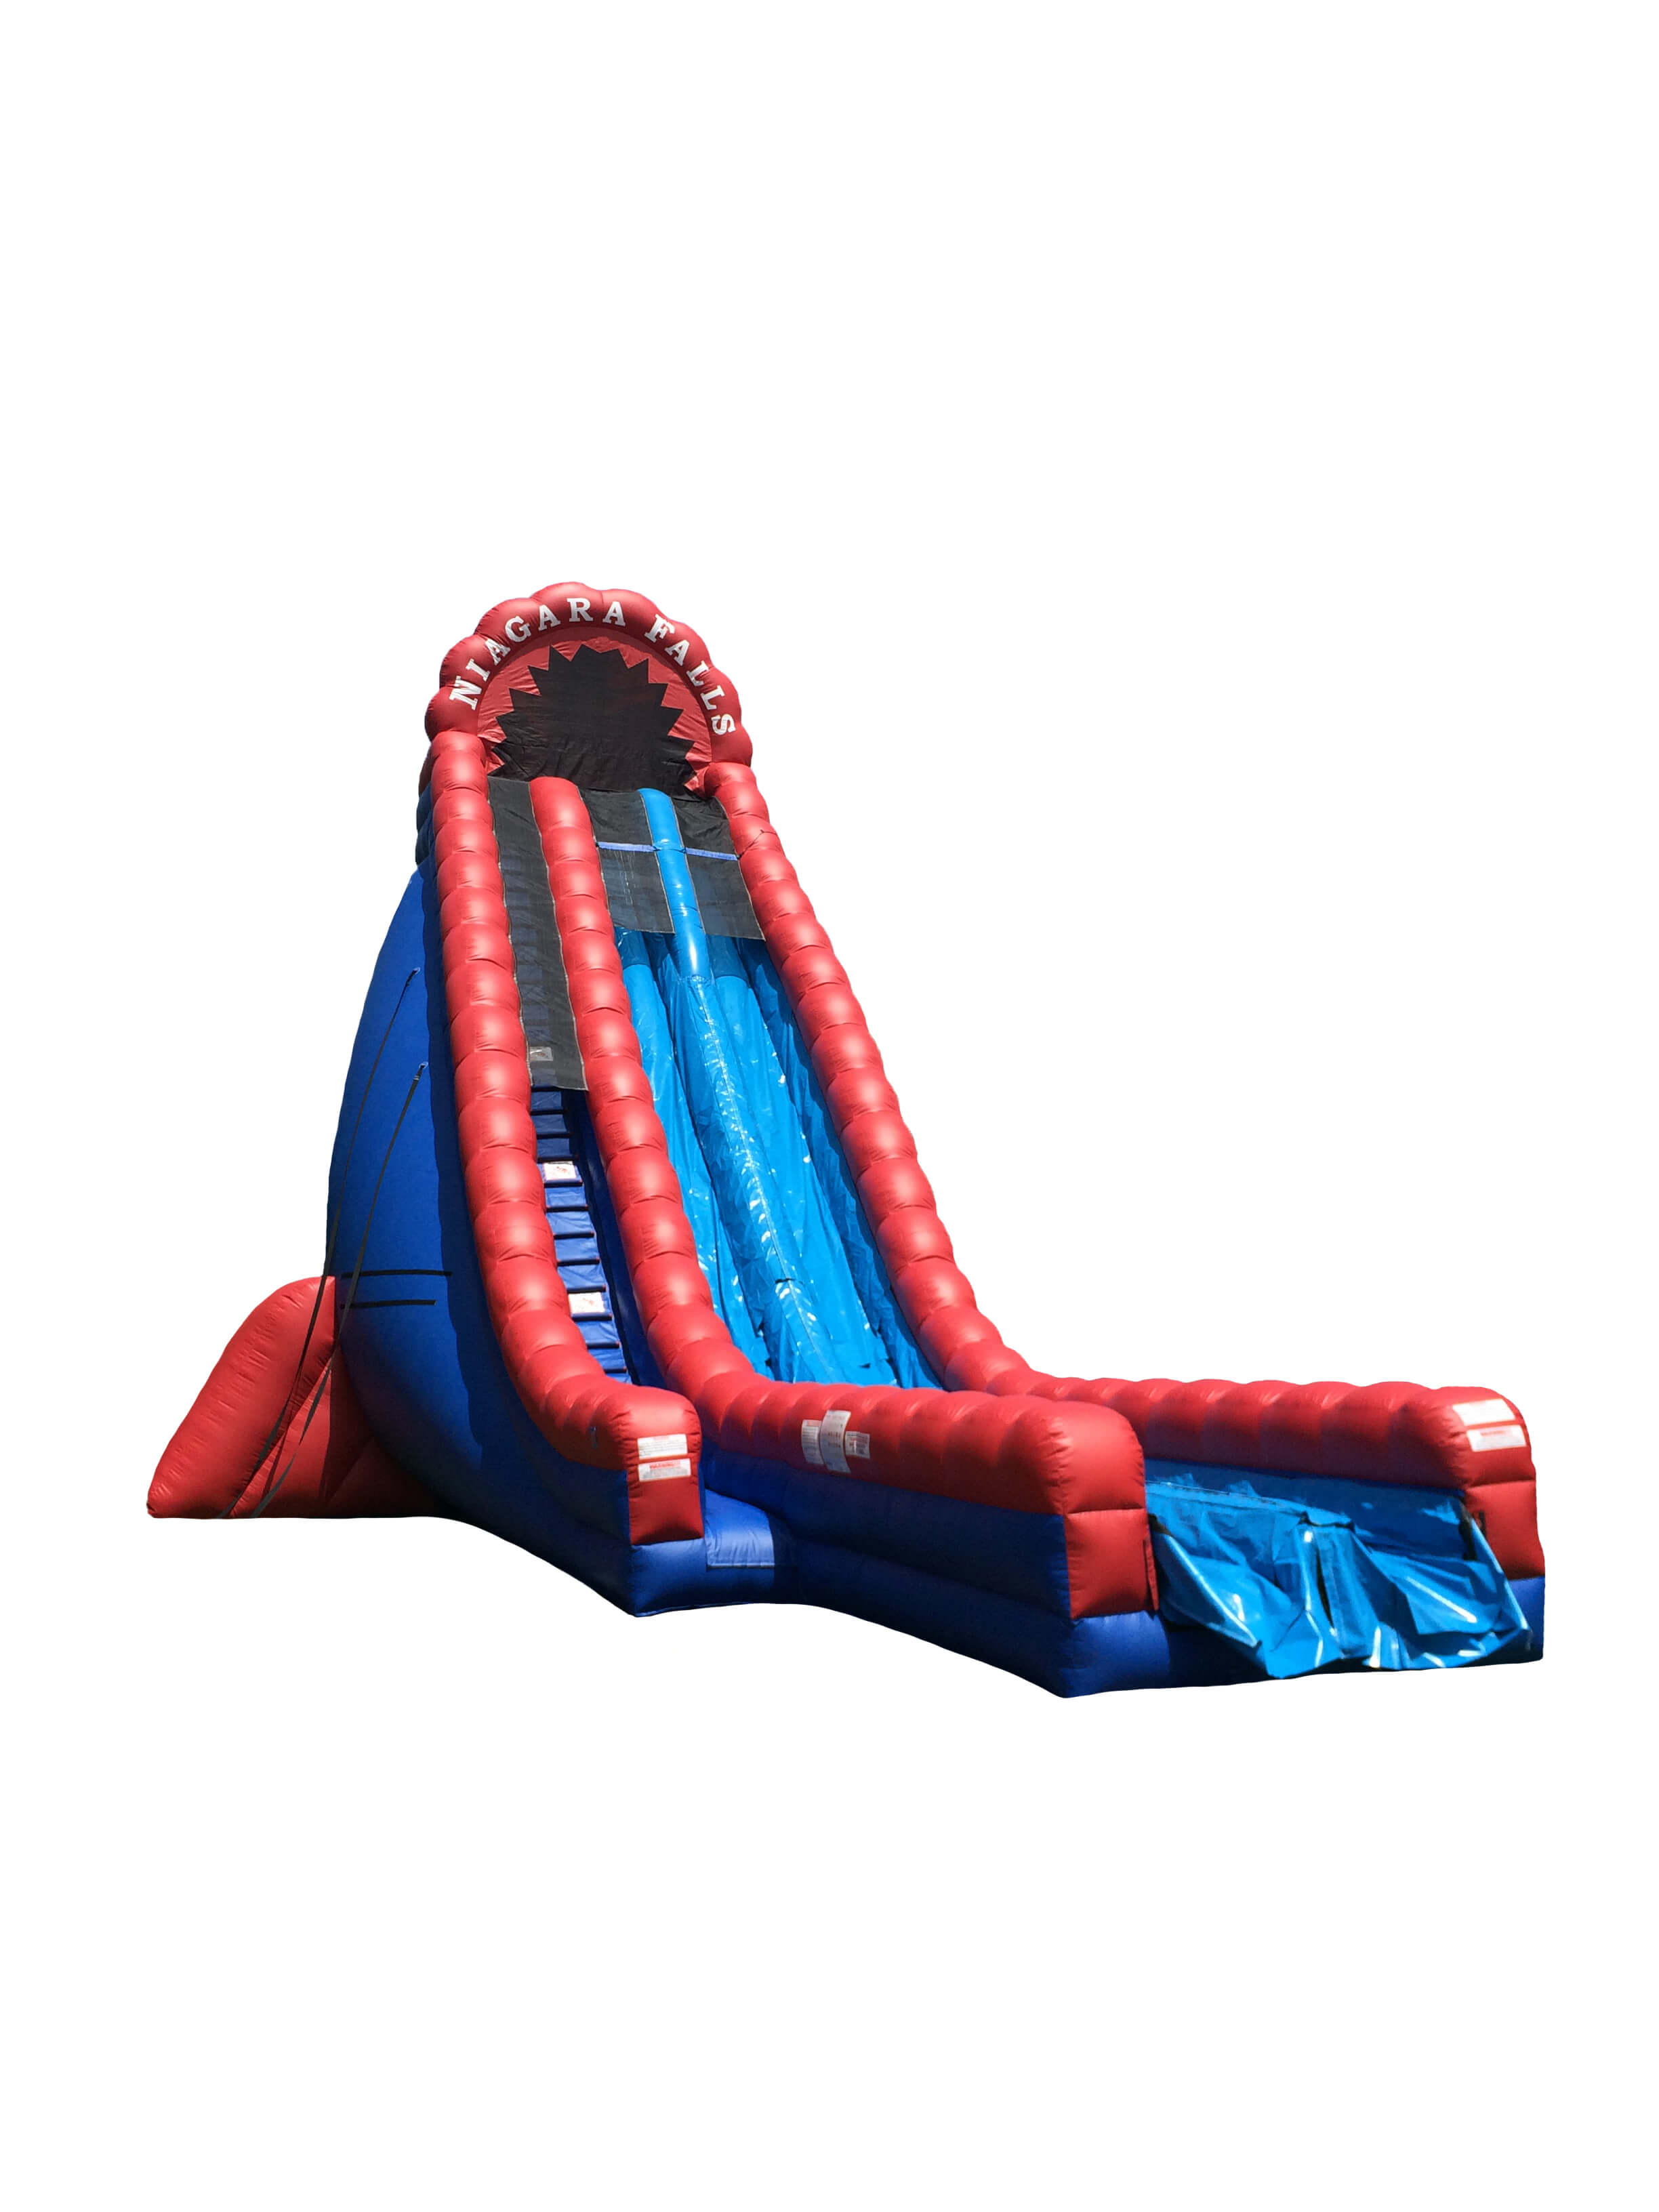 40' Niagara Falls Dry Slide, Inflatable Slide Rental